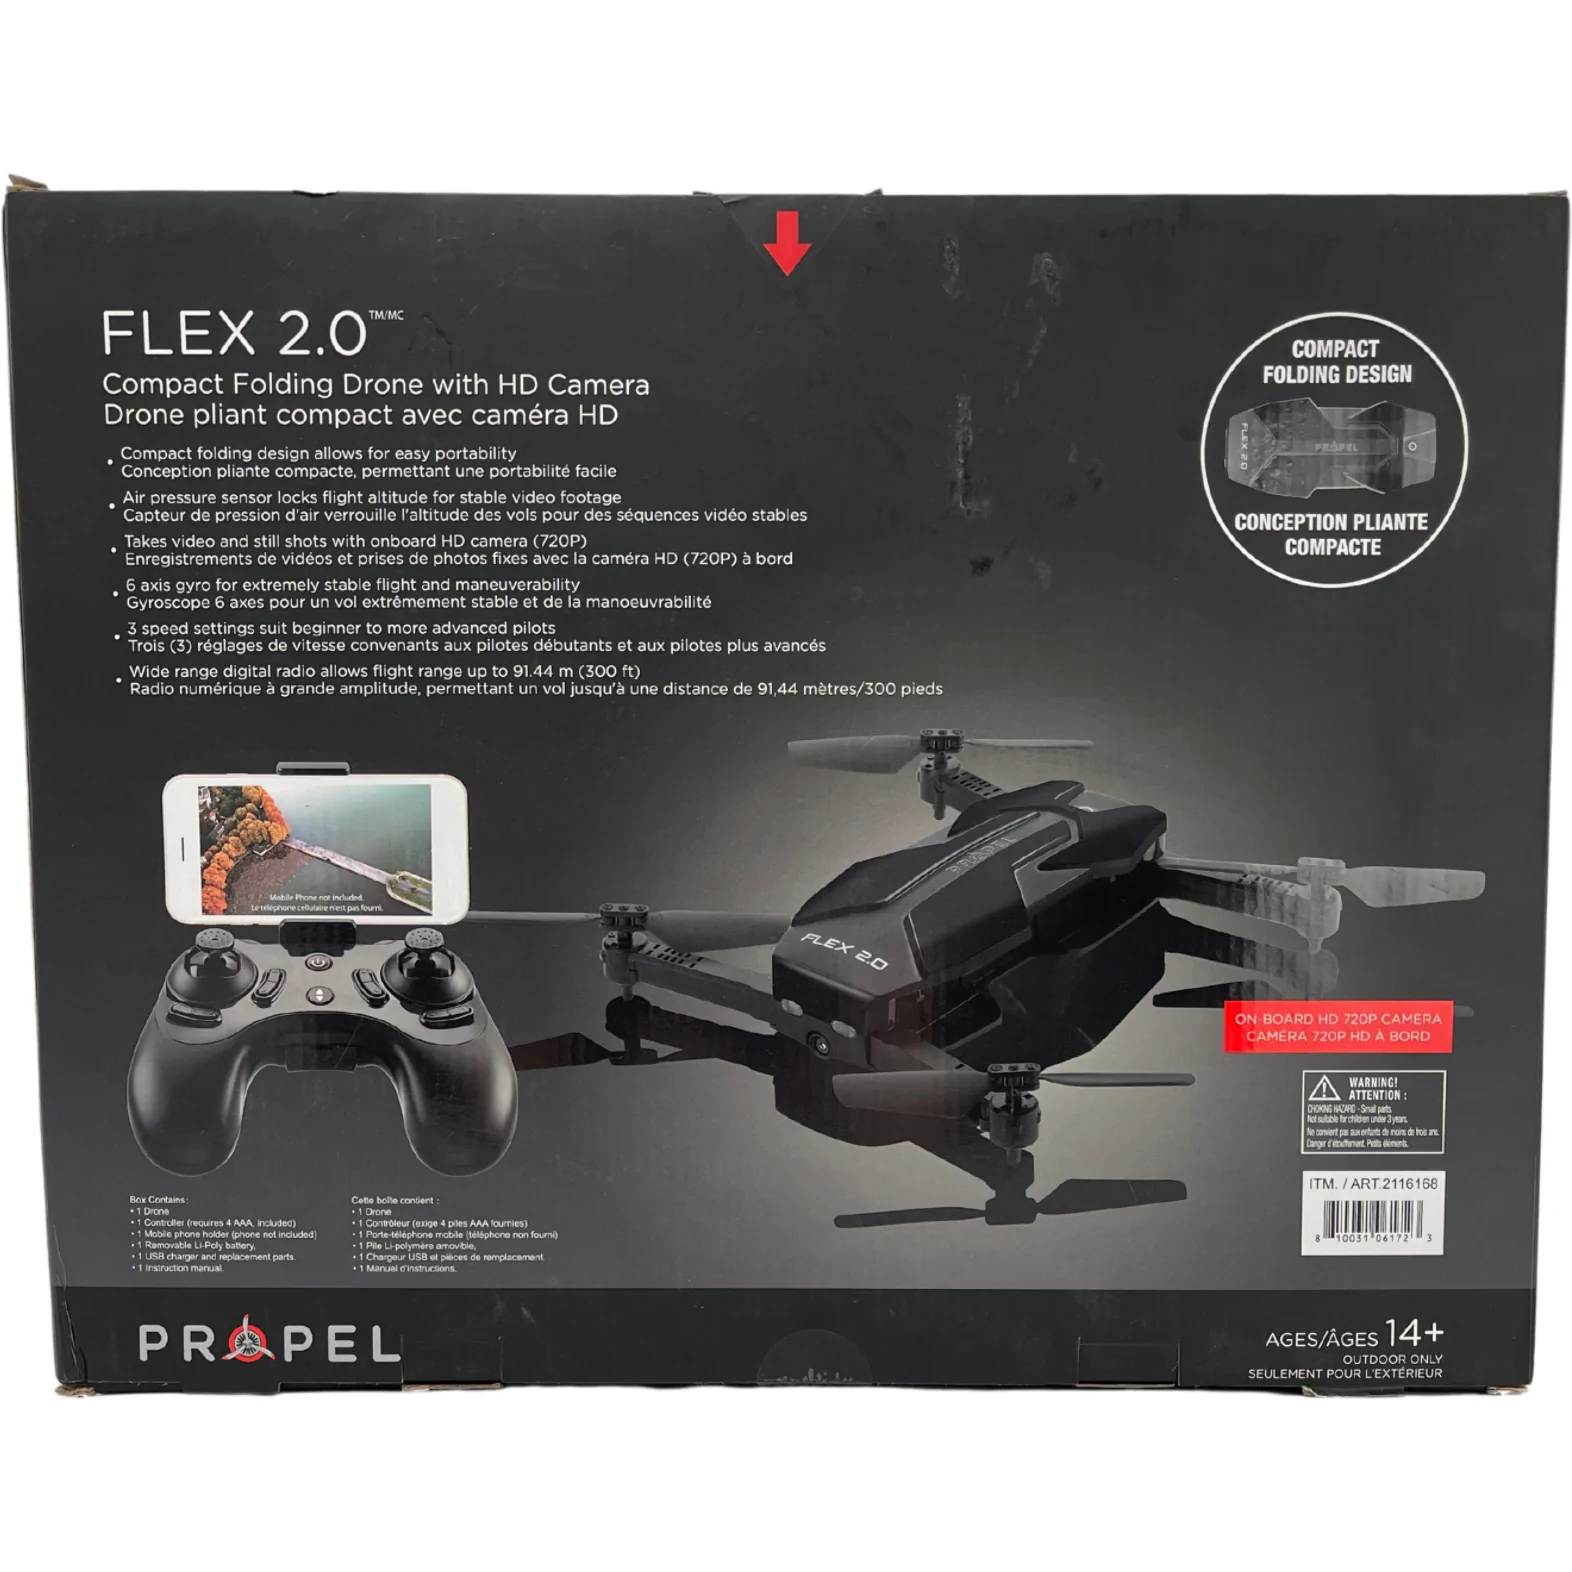 Propel Compact Folding Drone with HD Camera / Flex 2.0 / Remote Control Drone / Black **DEALS**